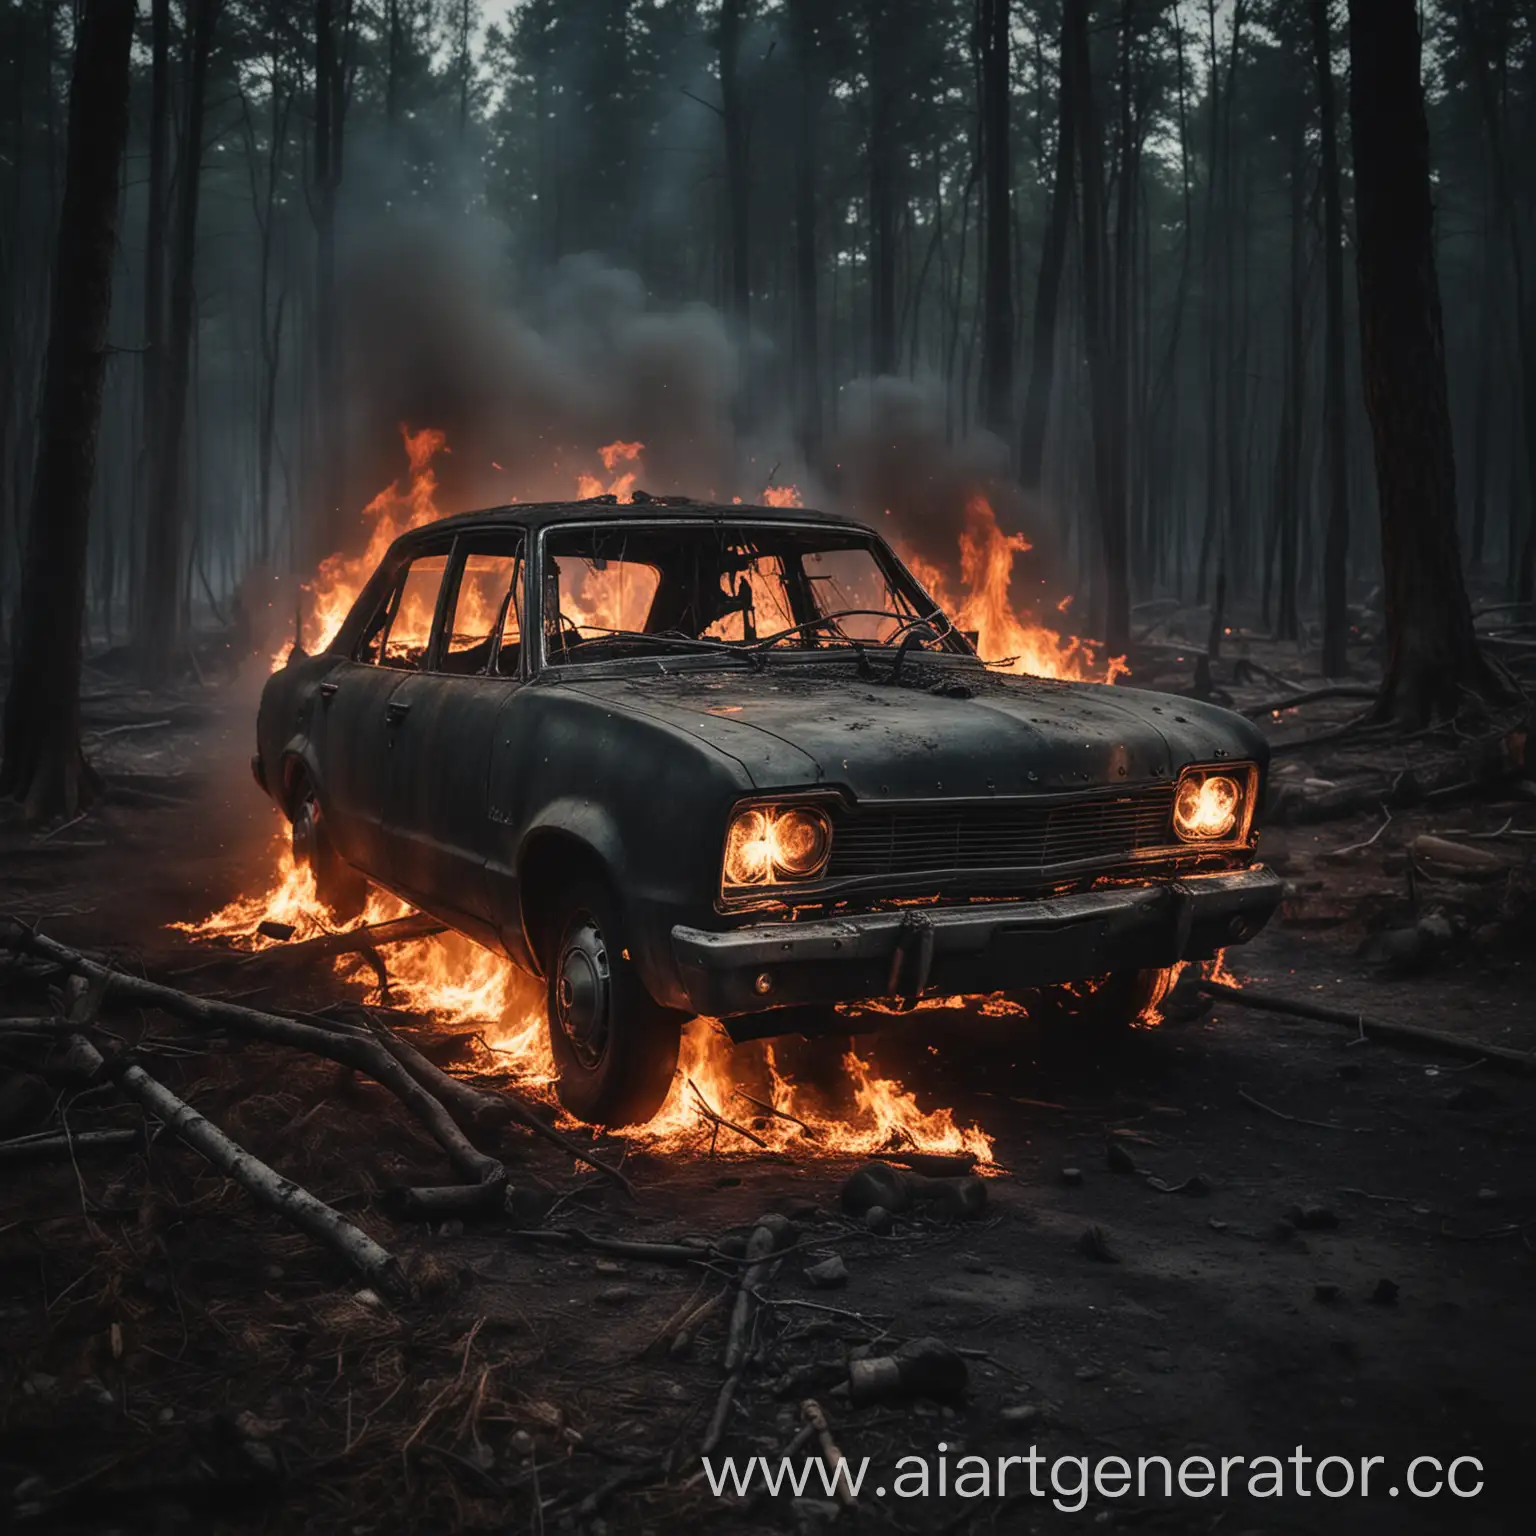 Eerie-Scene-Burning-Car-in-Dark-Forest